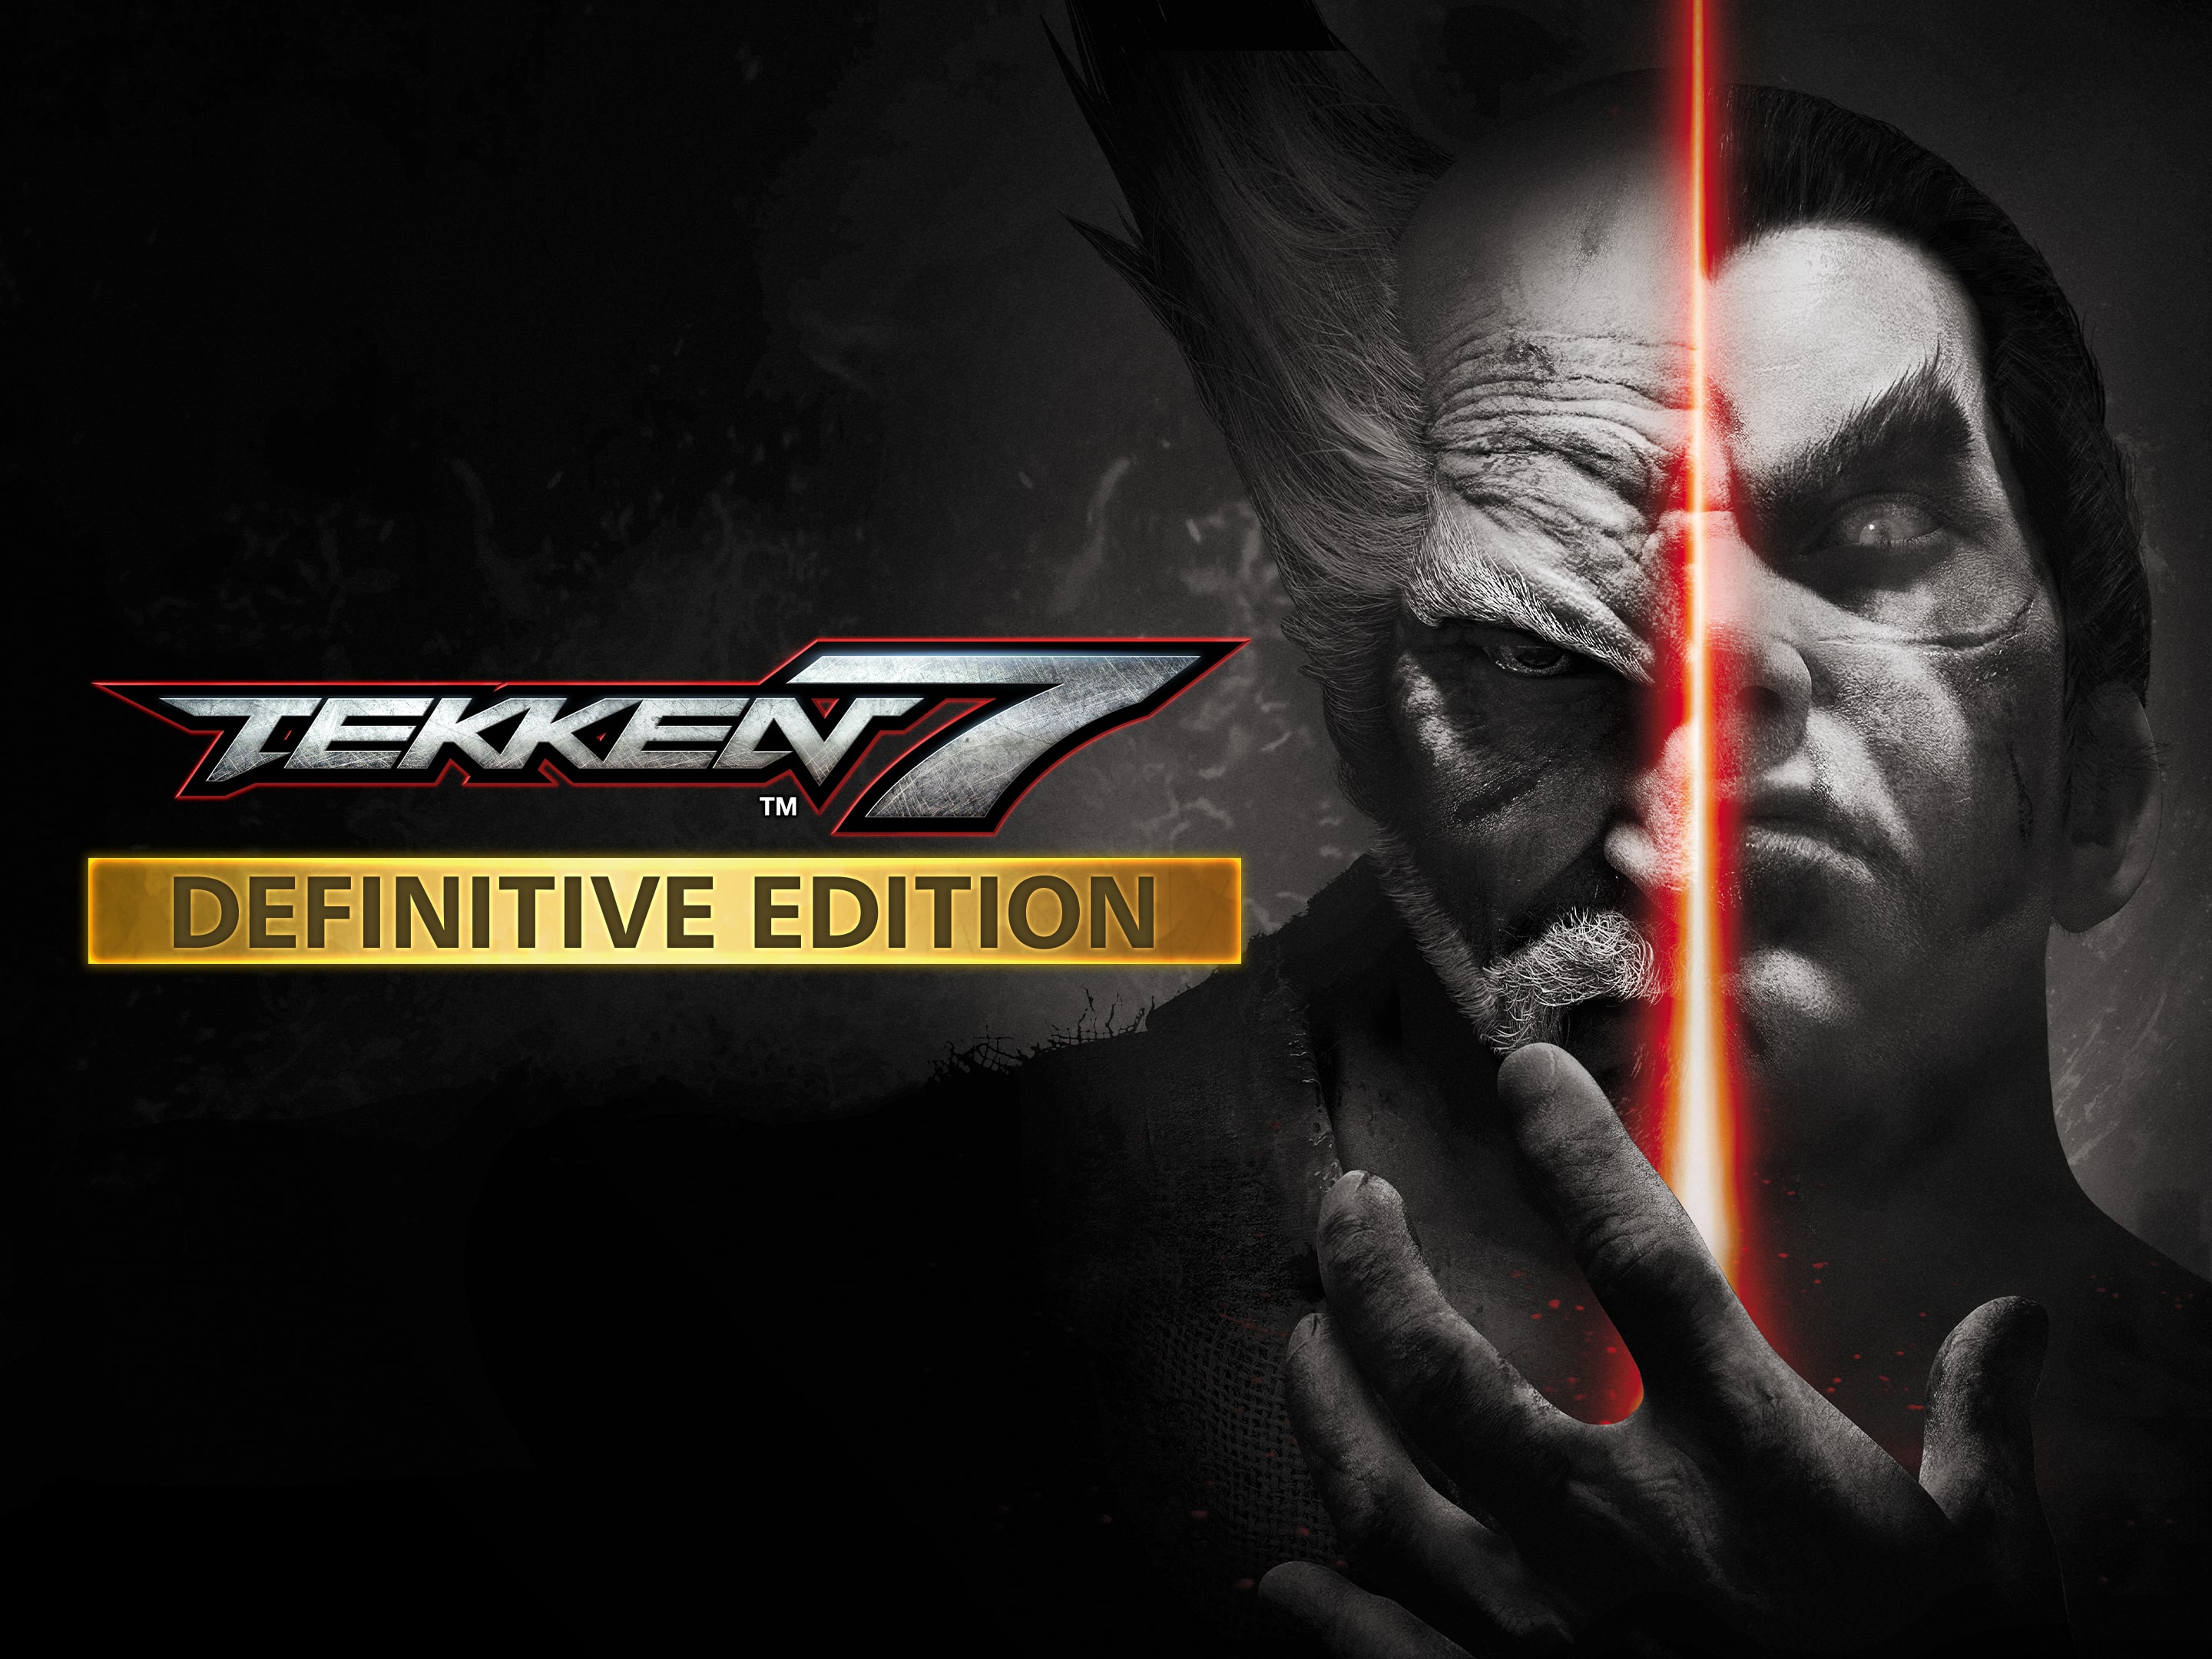 7 Tekken PlayStation (US) - Games PS4 |